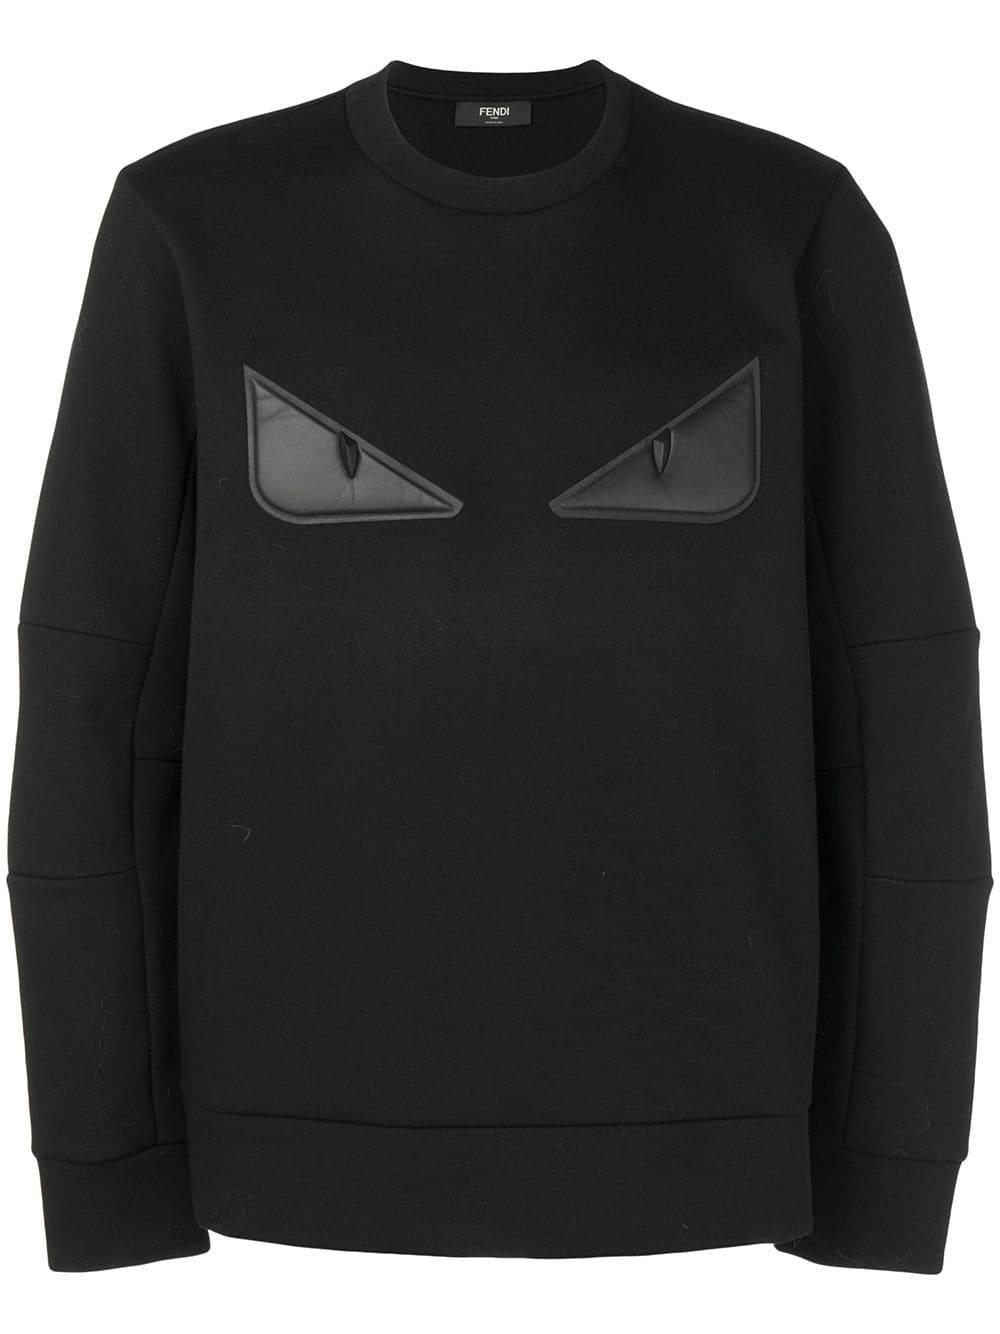 Fendi Bag Bugs Eyes Sweatshirt in Black for Men - Lyst